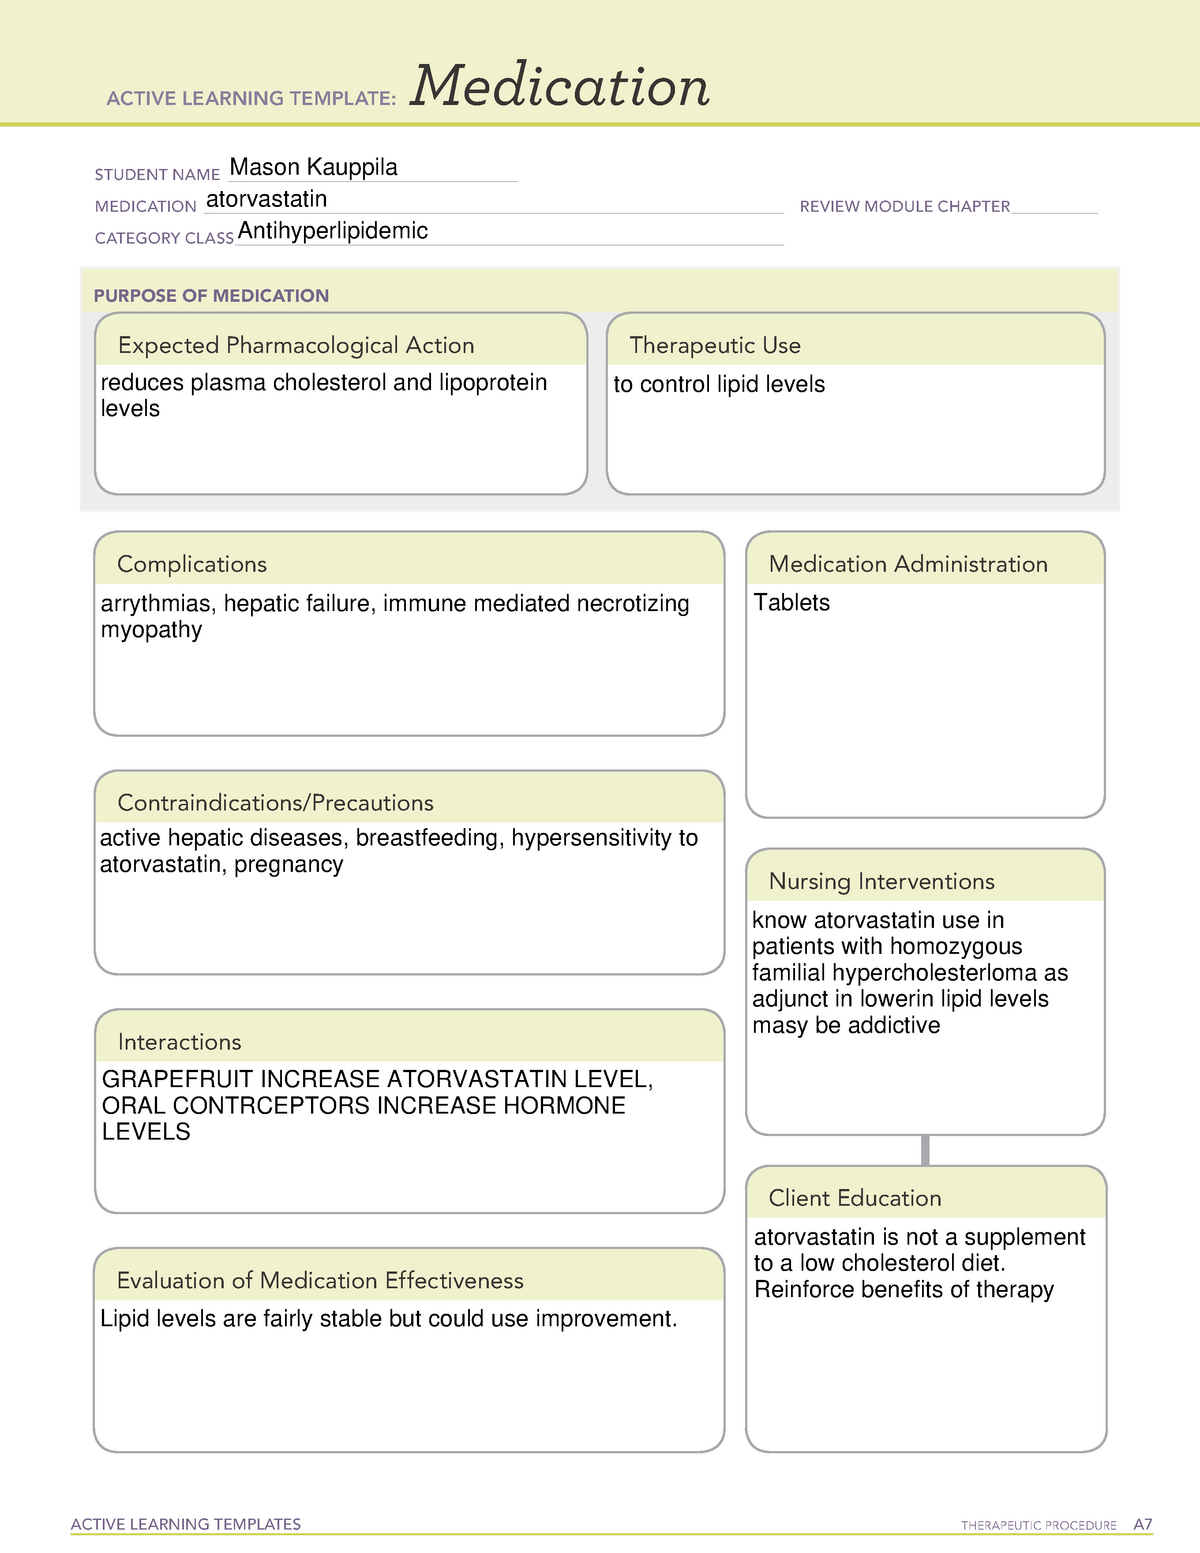 atorvastatin-ati-medication-template